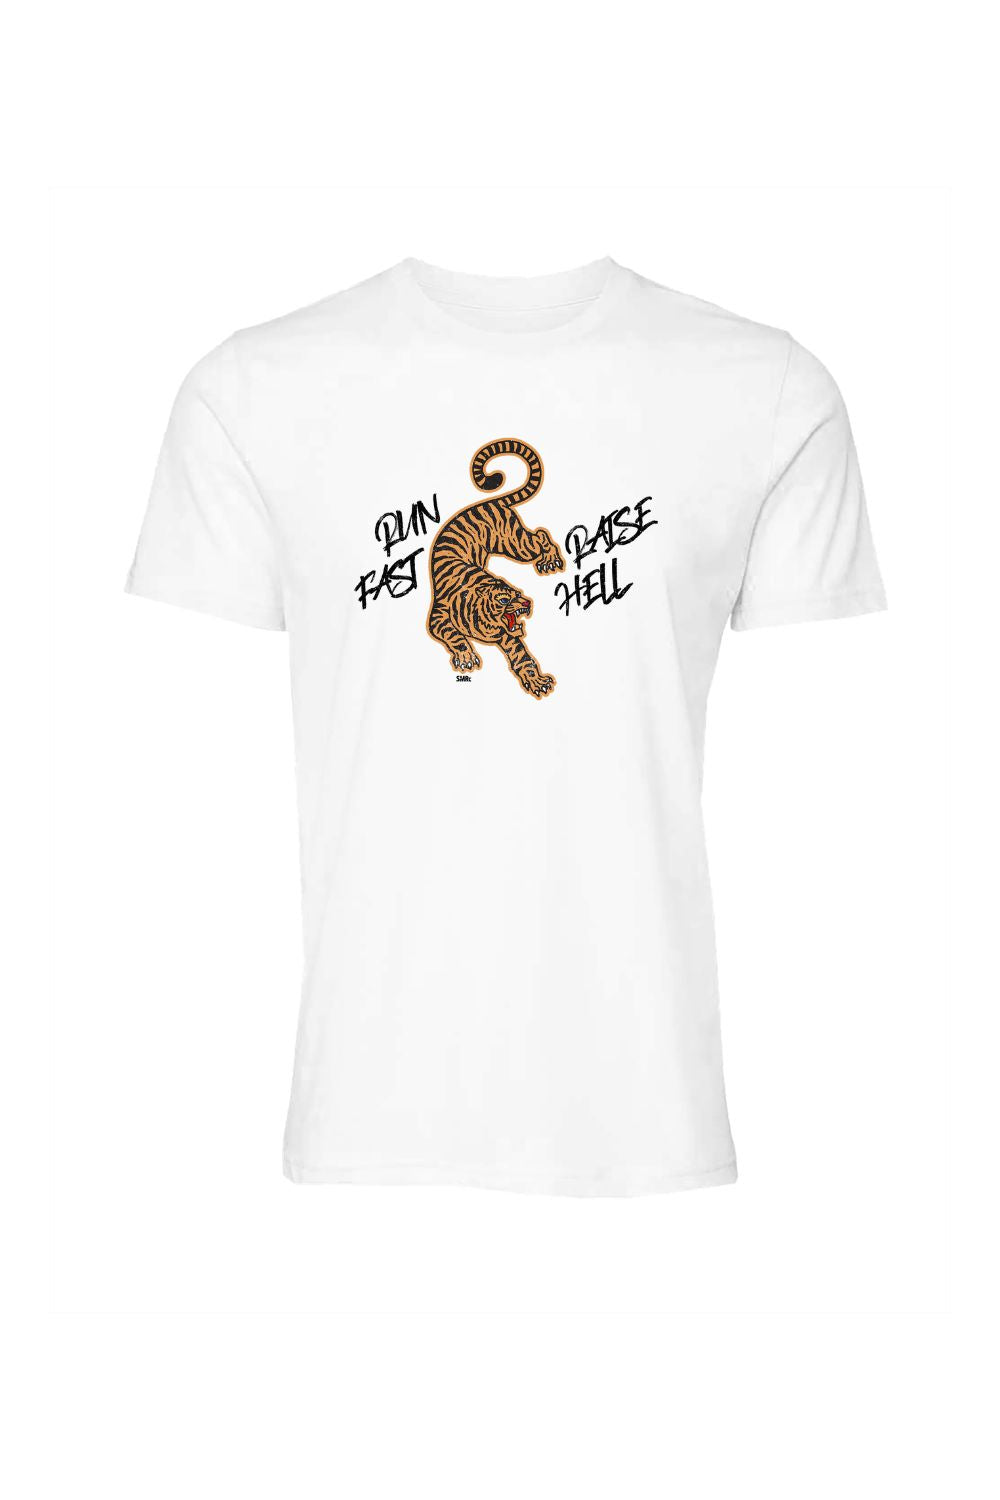 Run Fast Raise Hell Tiger T-Shirt